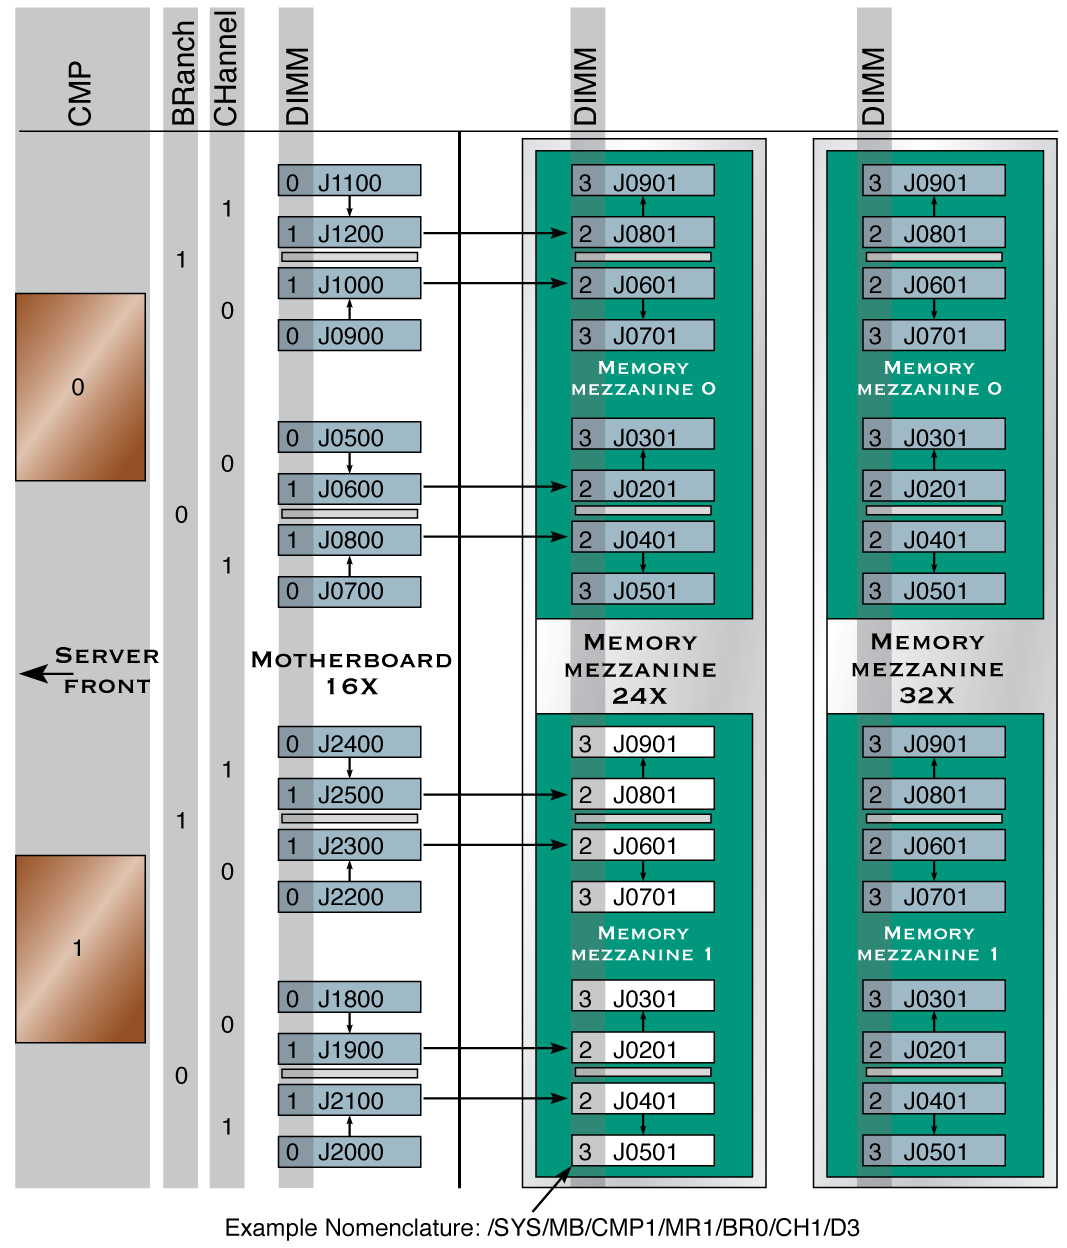 image:Figure showing the upgradable memory mezzanine FB-DIMM configuration